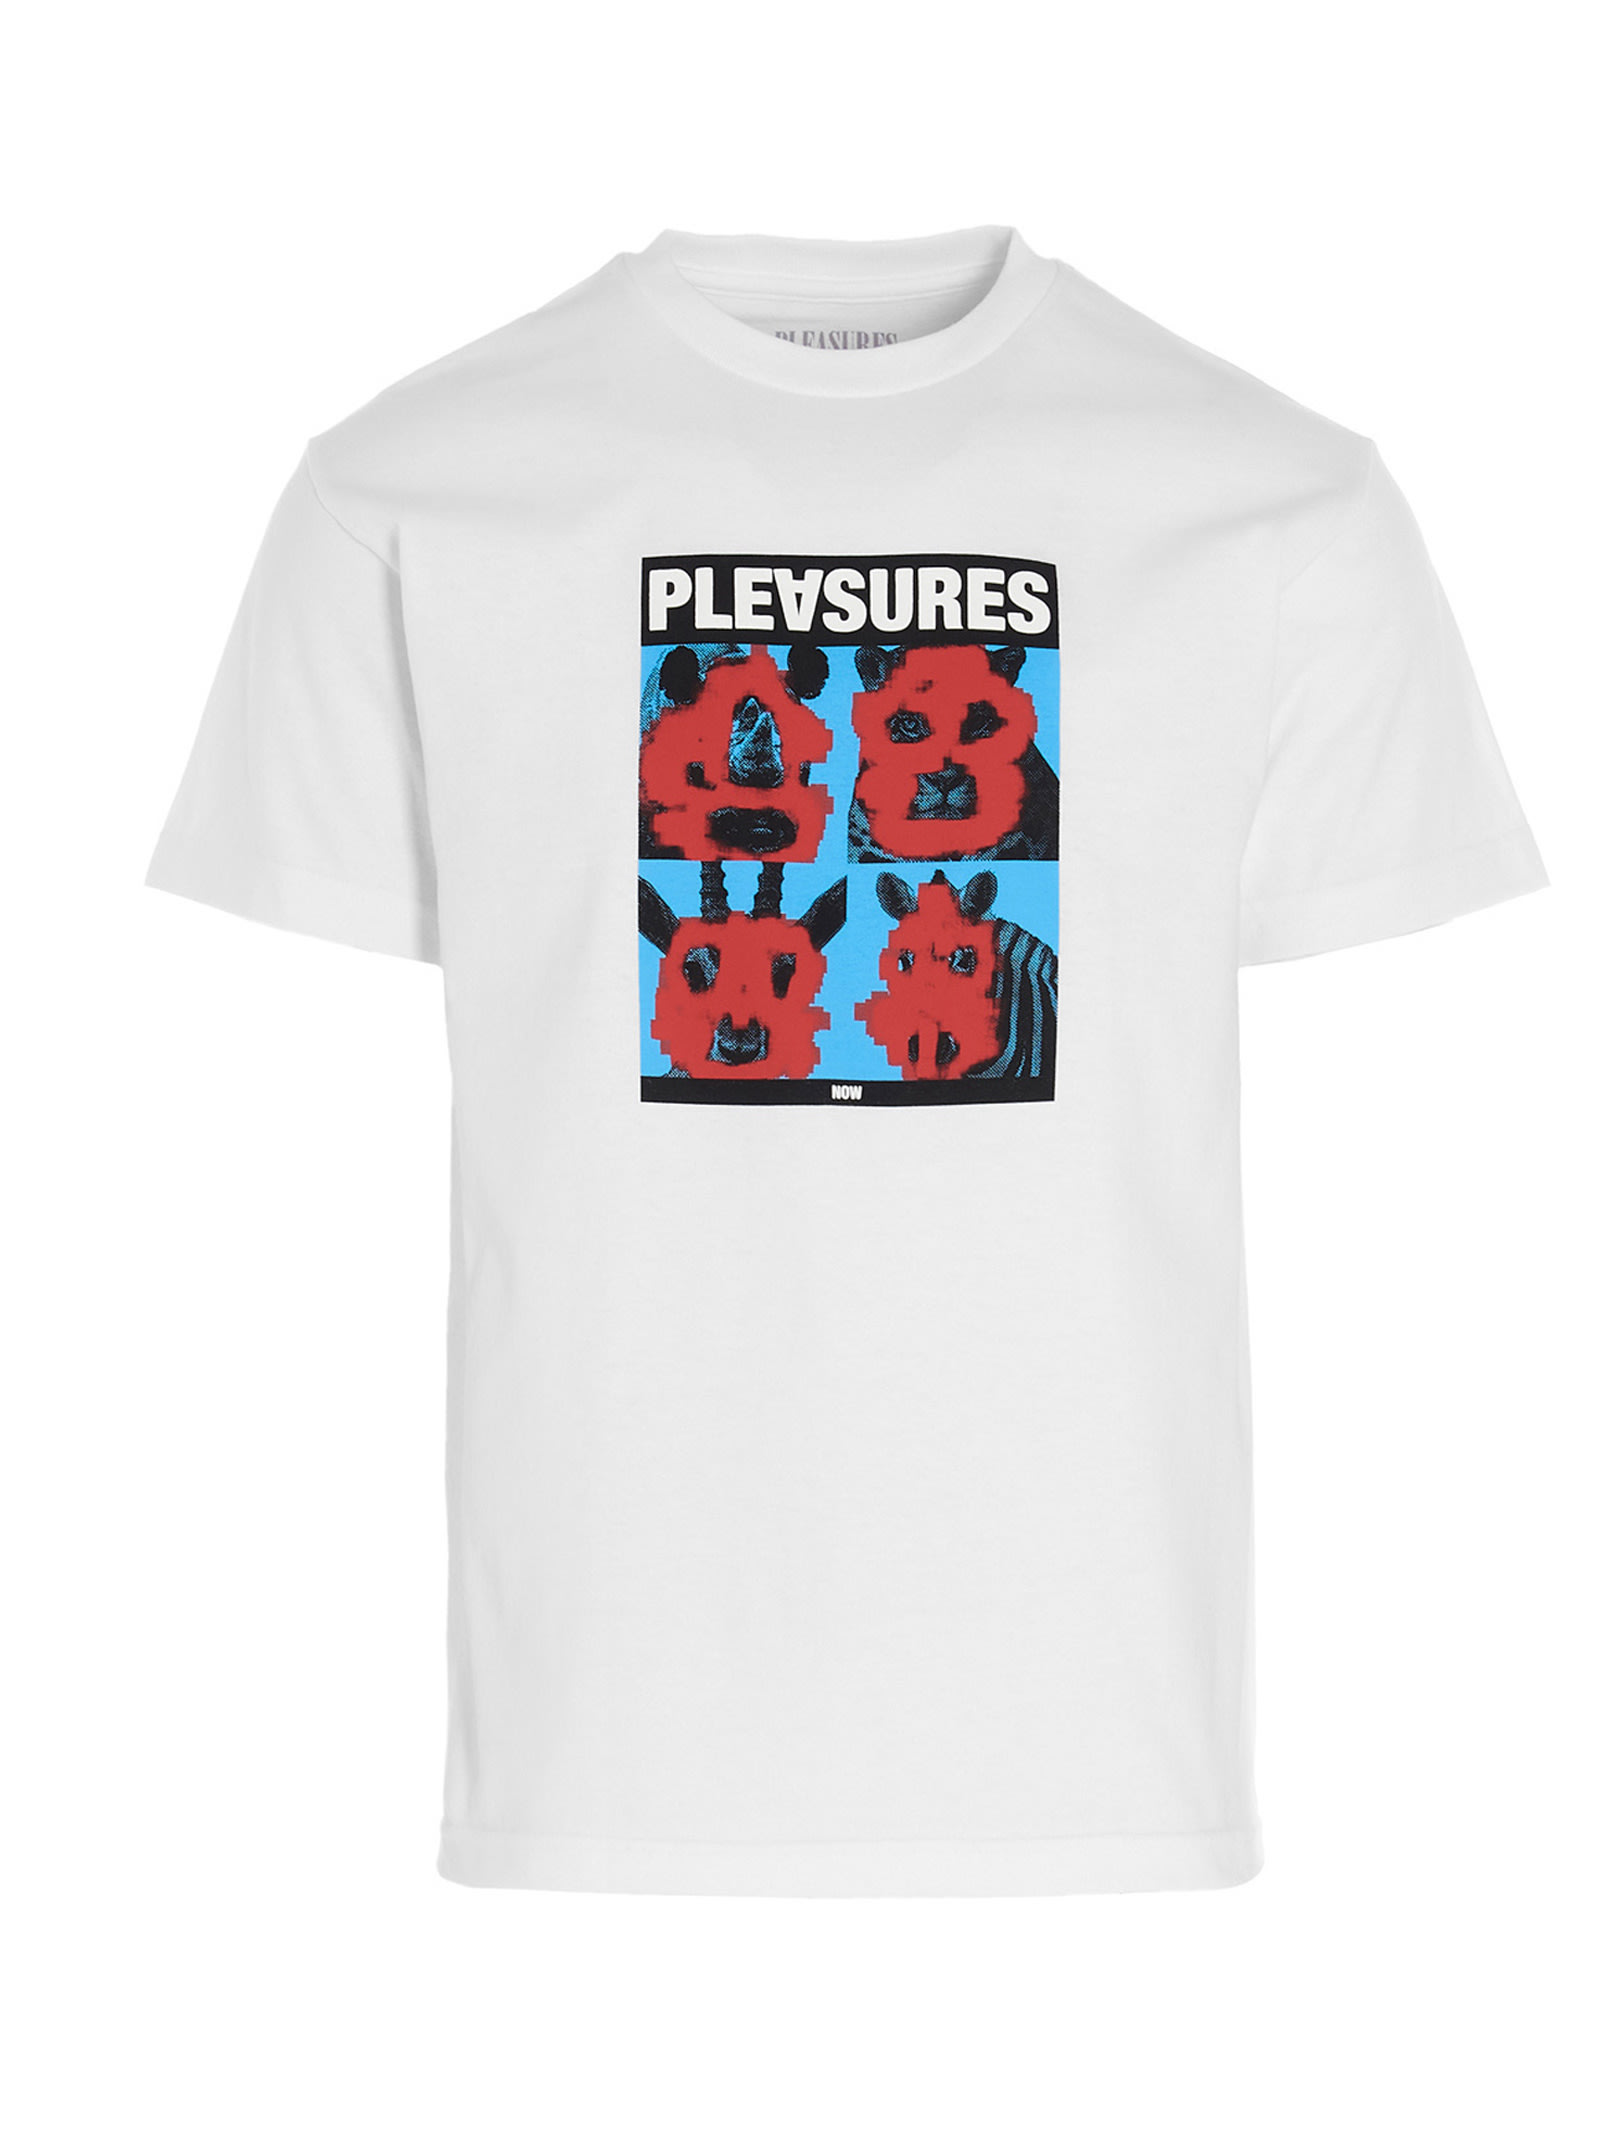 Pleasures lost T-shirt